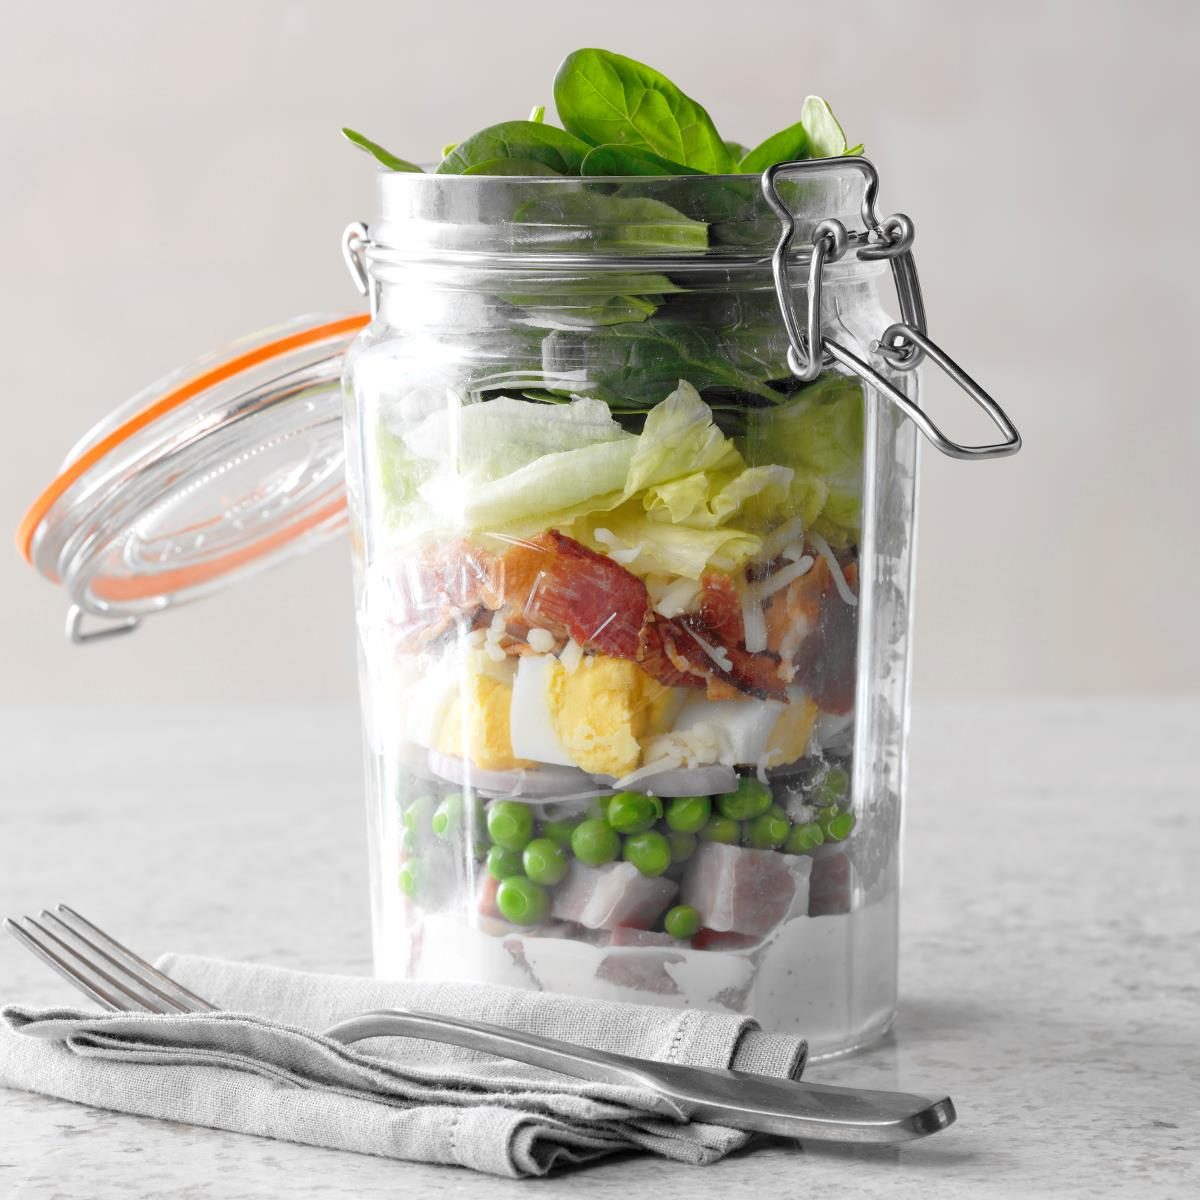 Ham and Swiss Salad in a Jar